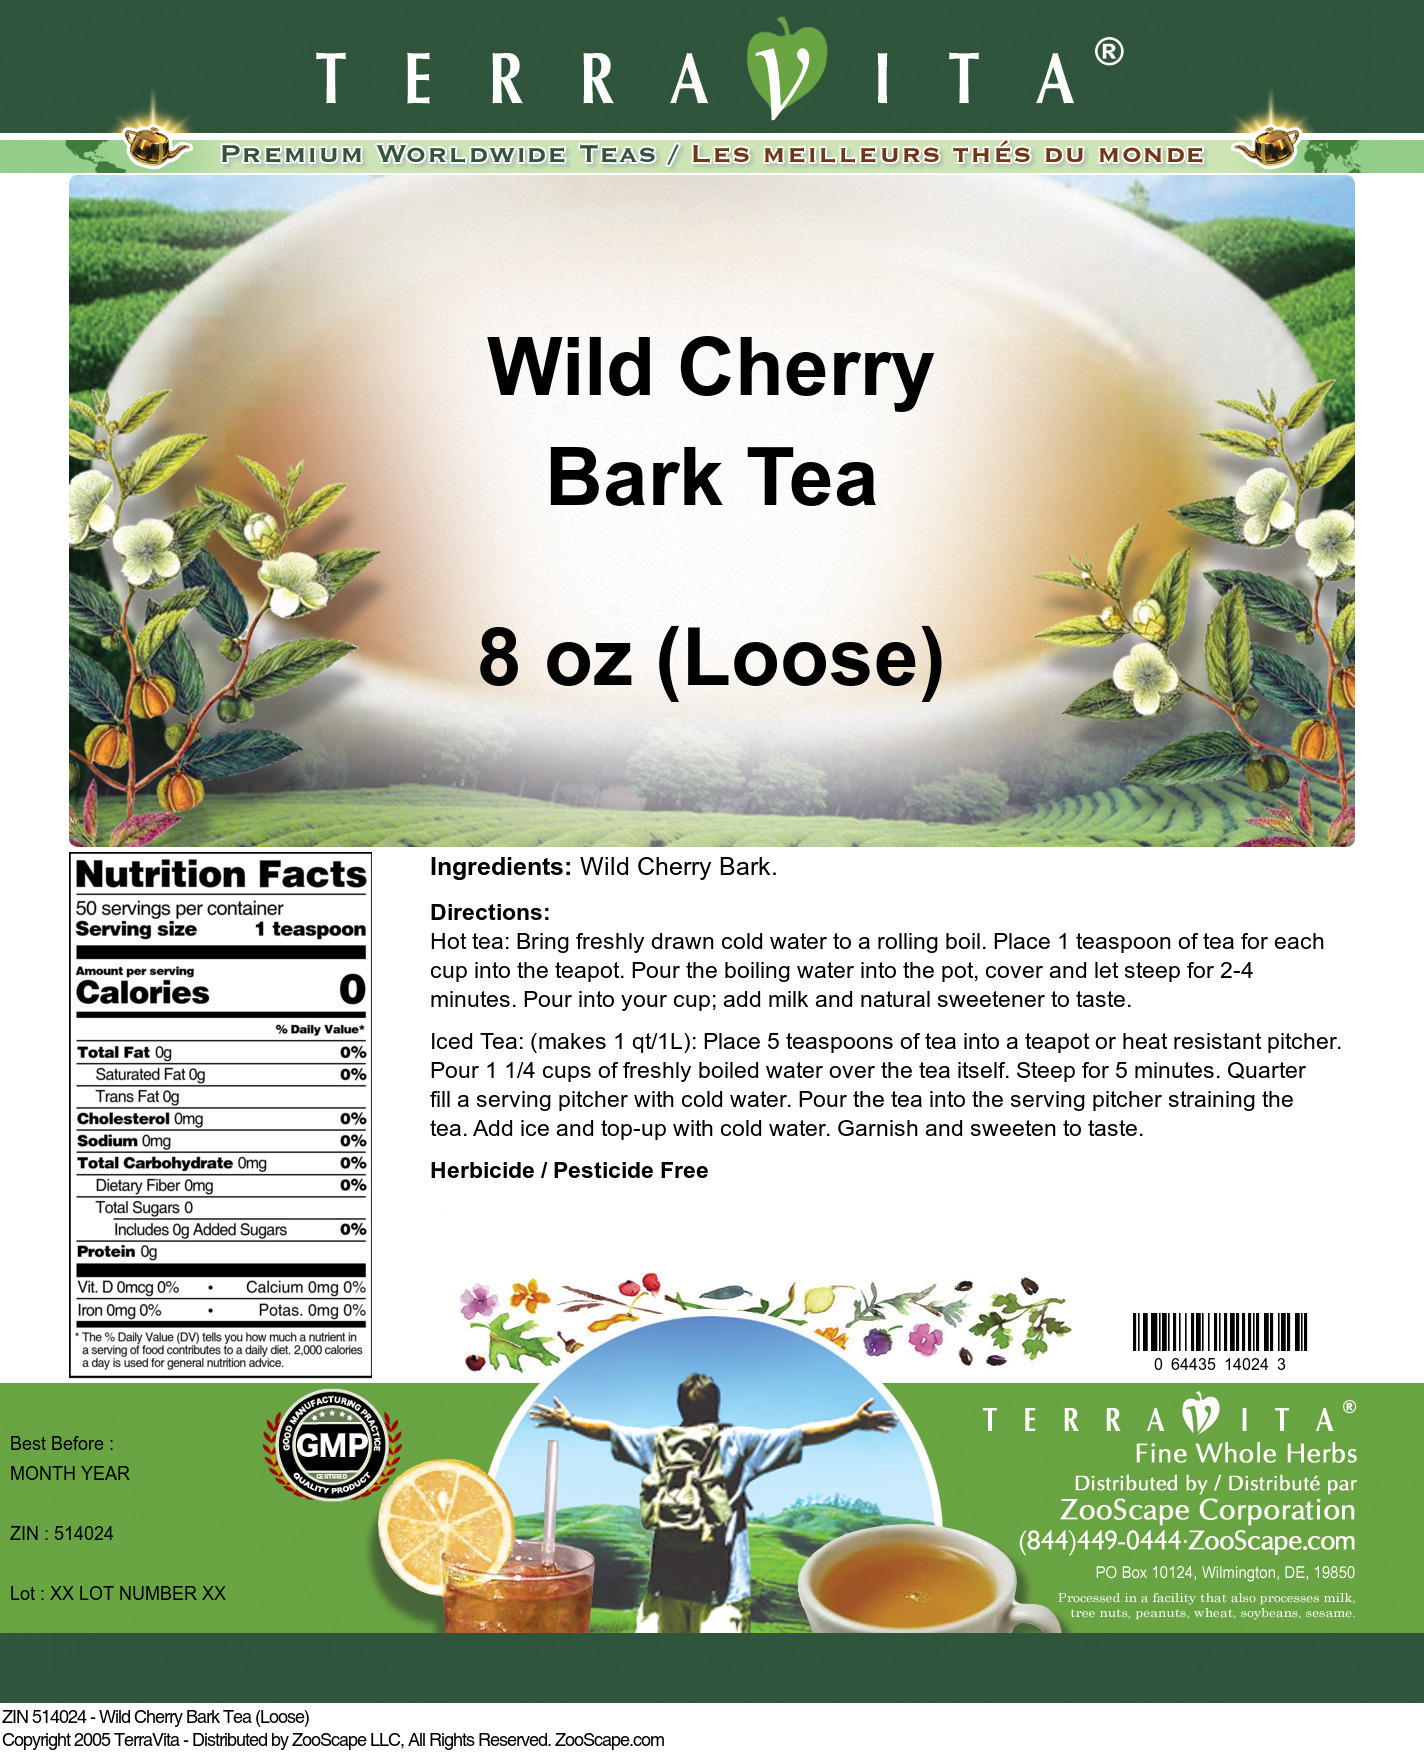 Wild Cherry Bark Tea (Loose) - Label